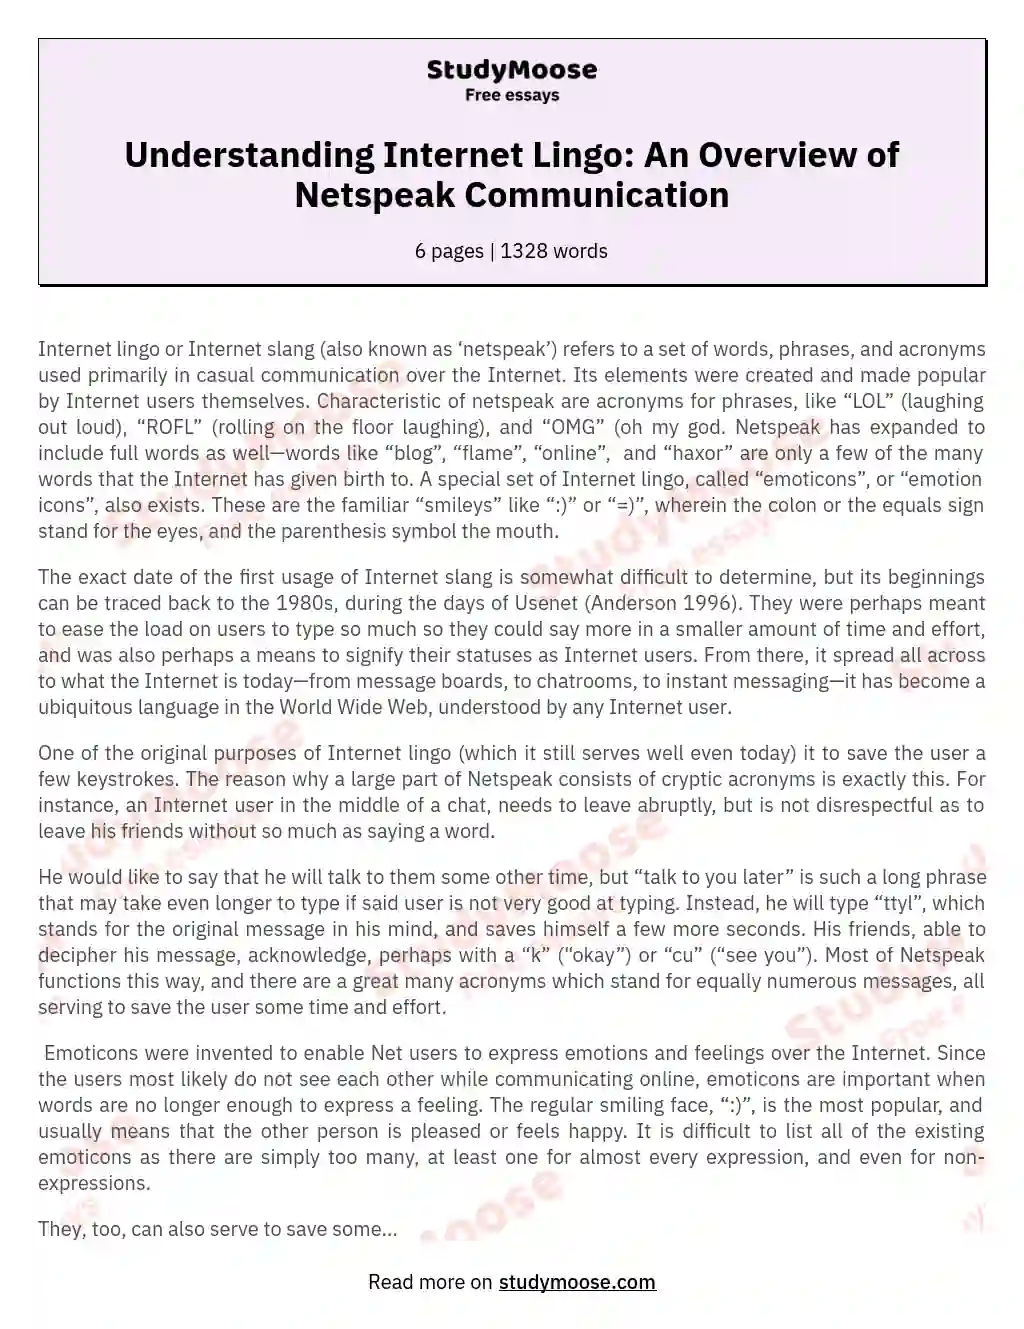 Understanding Internet Lingo: An Overview of Netspeak Communication essay